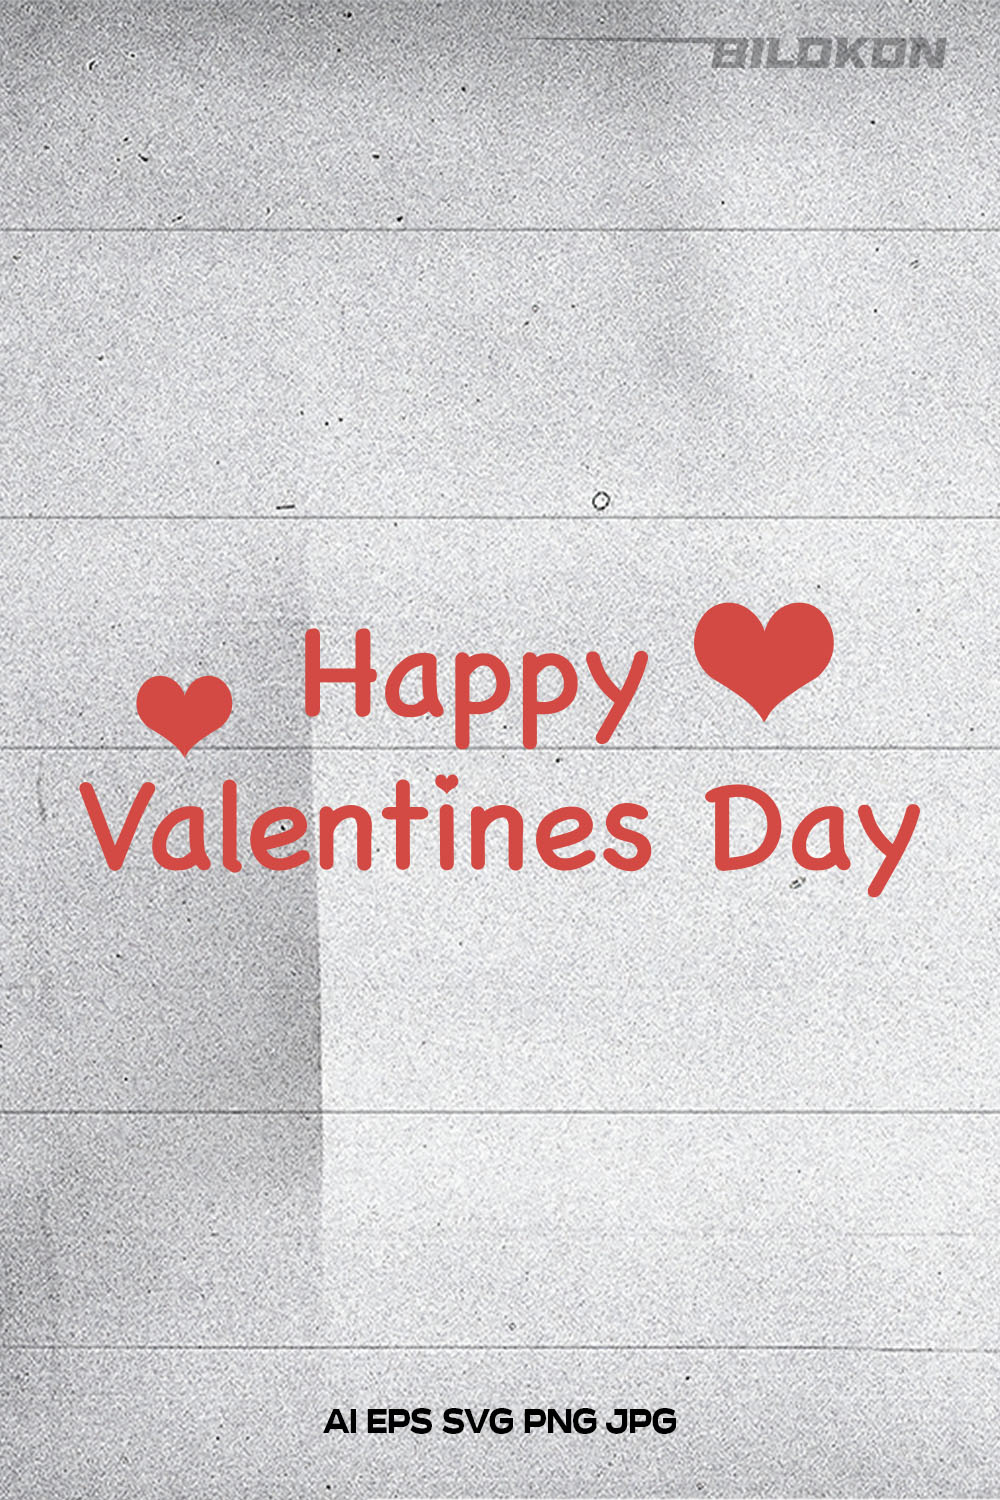 Happy Valentine's Day Vector Illustration pinterest image.